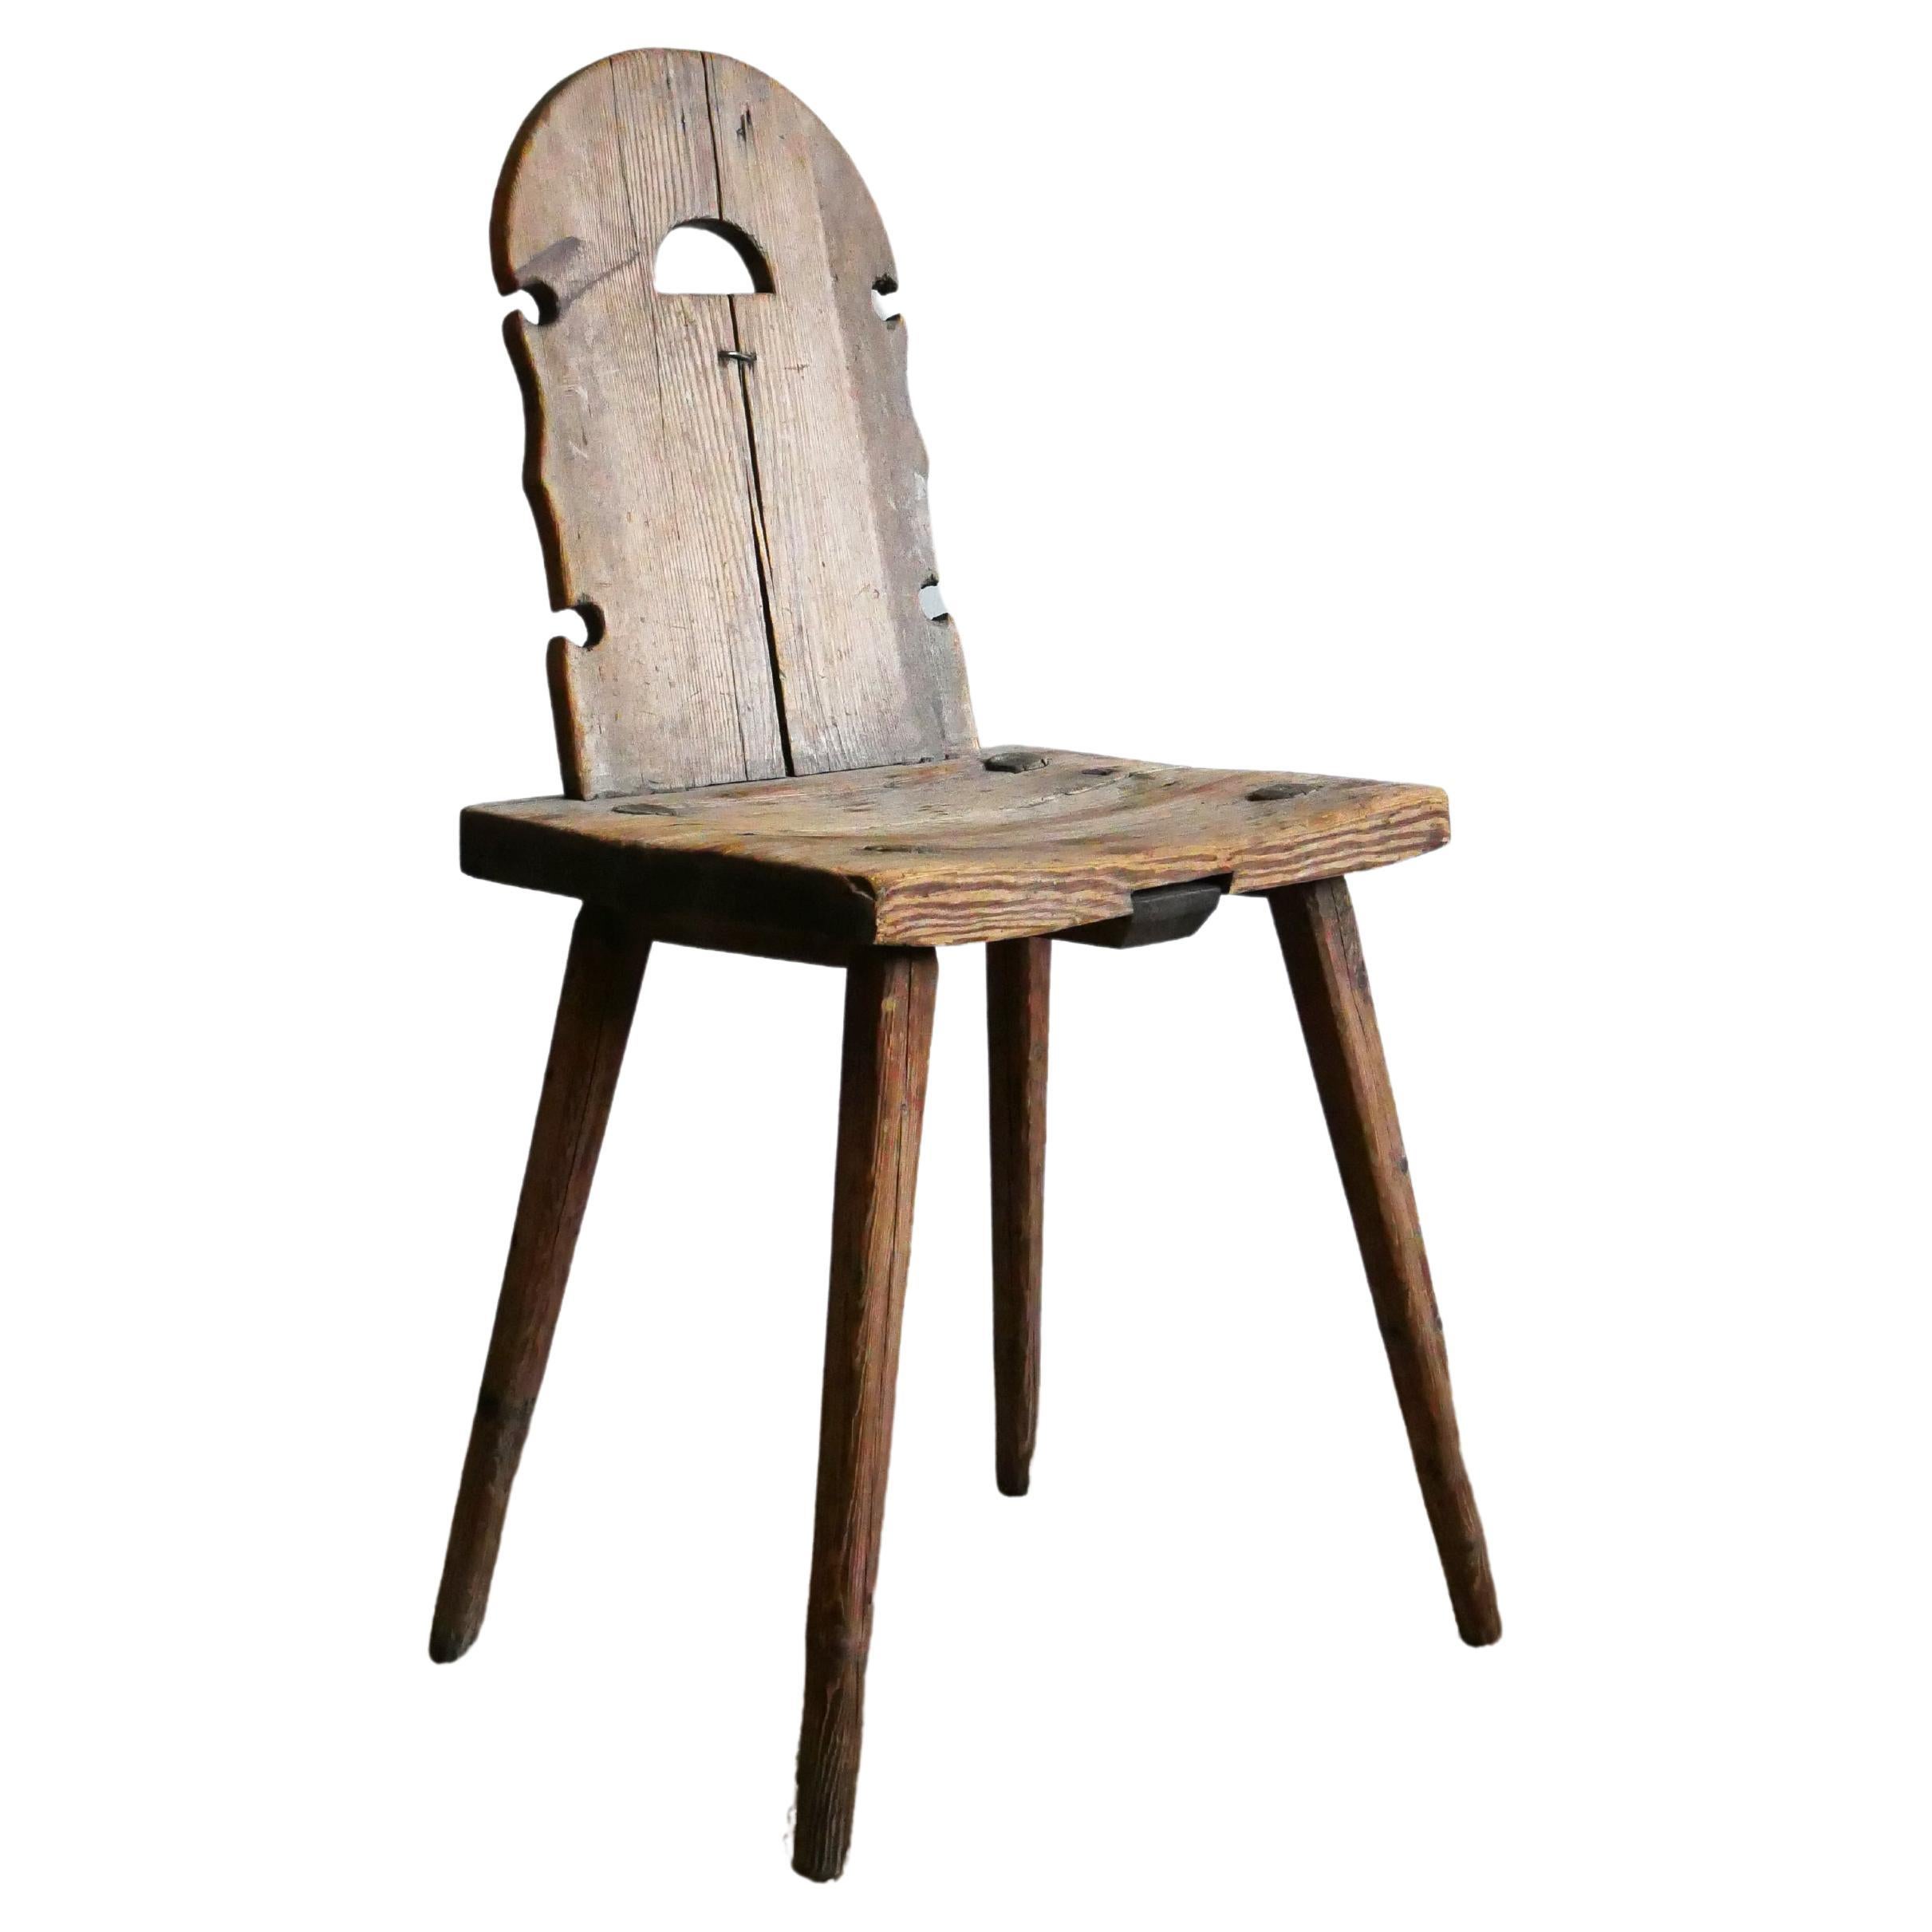 Swedish Folk Art Chair, circa 1780-1830s